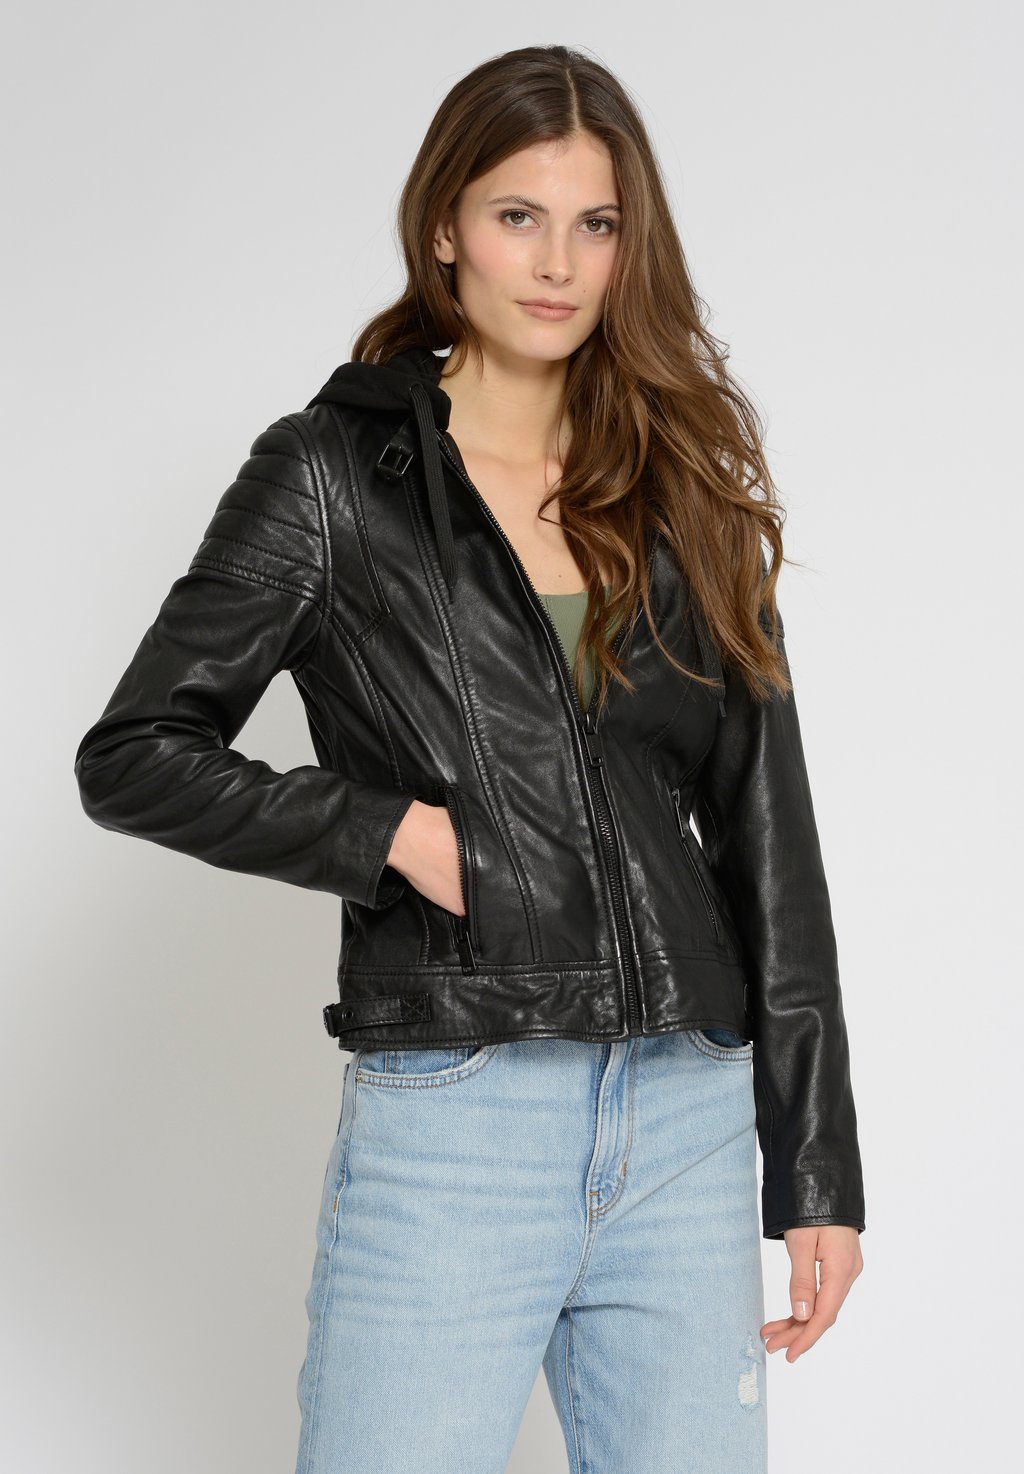 кожаная куртка mustang размер 3xl черный Кожаная куртка Mustang Nahkatakki, черный